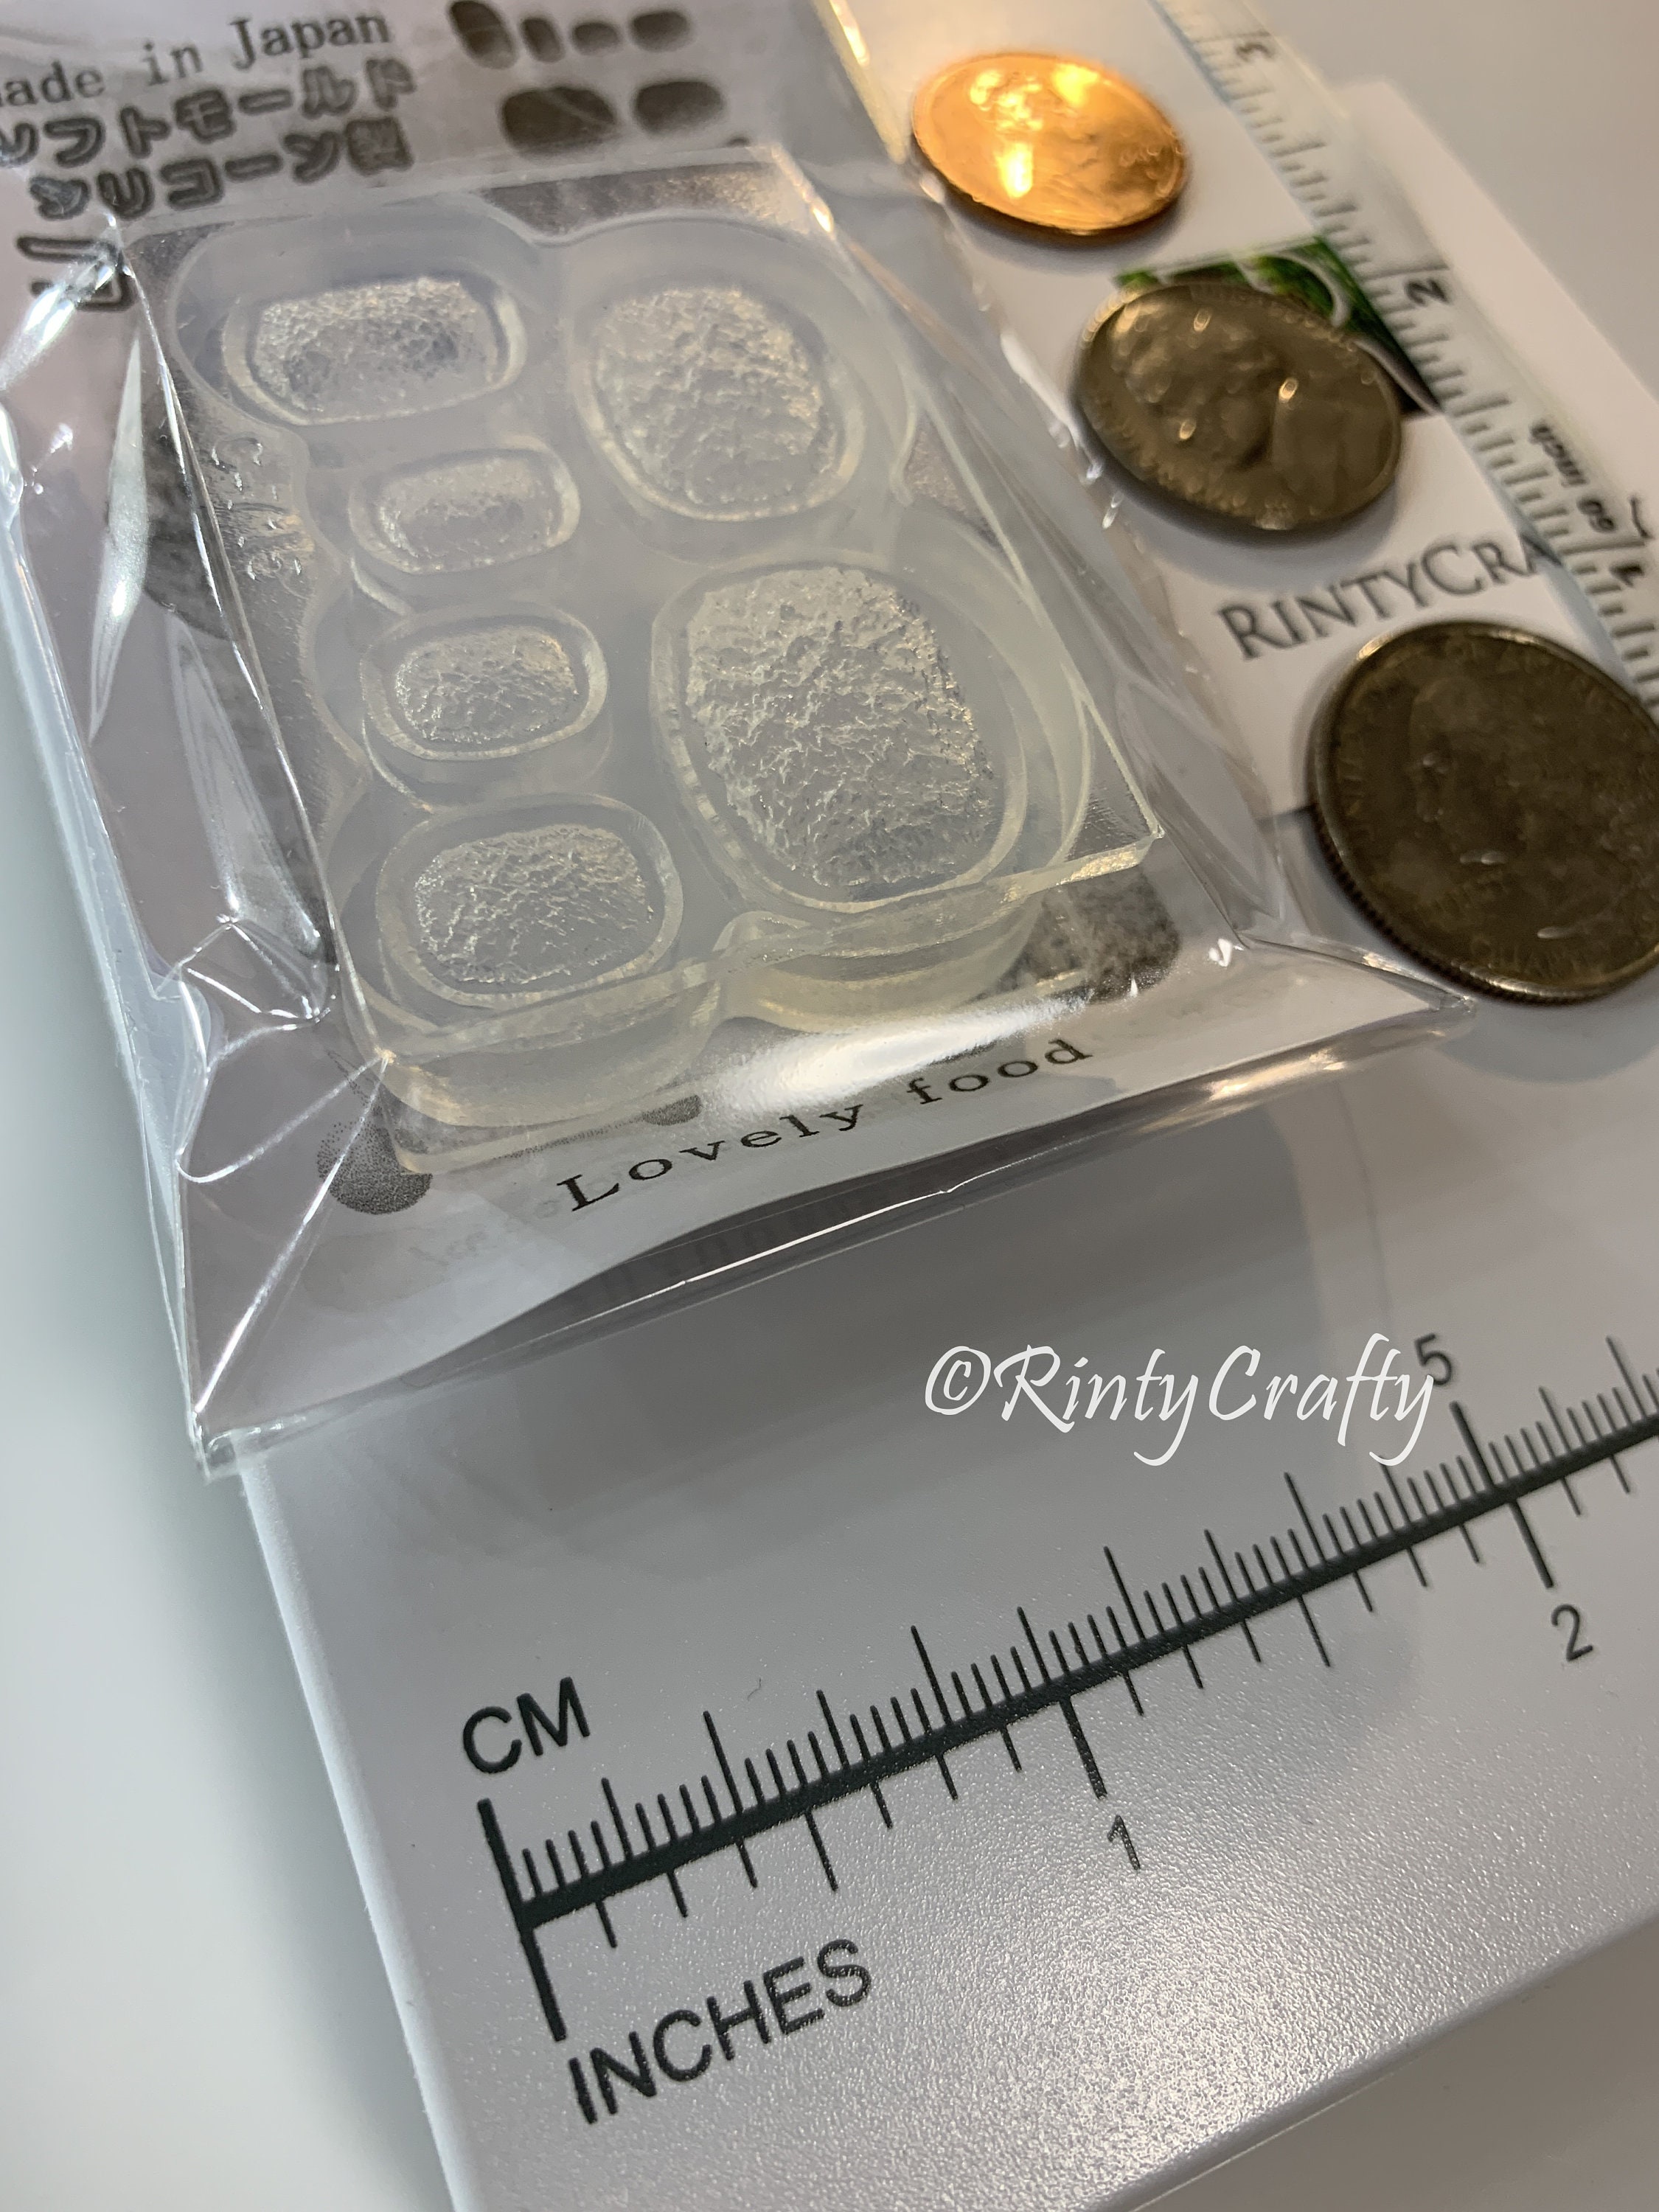 Molde de silicona, molde de croquetas en miniatura, para hacer alimentos  falsos en miniatura arcilla polimérica de resina UV Floree Original  auténtico Japón -  México